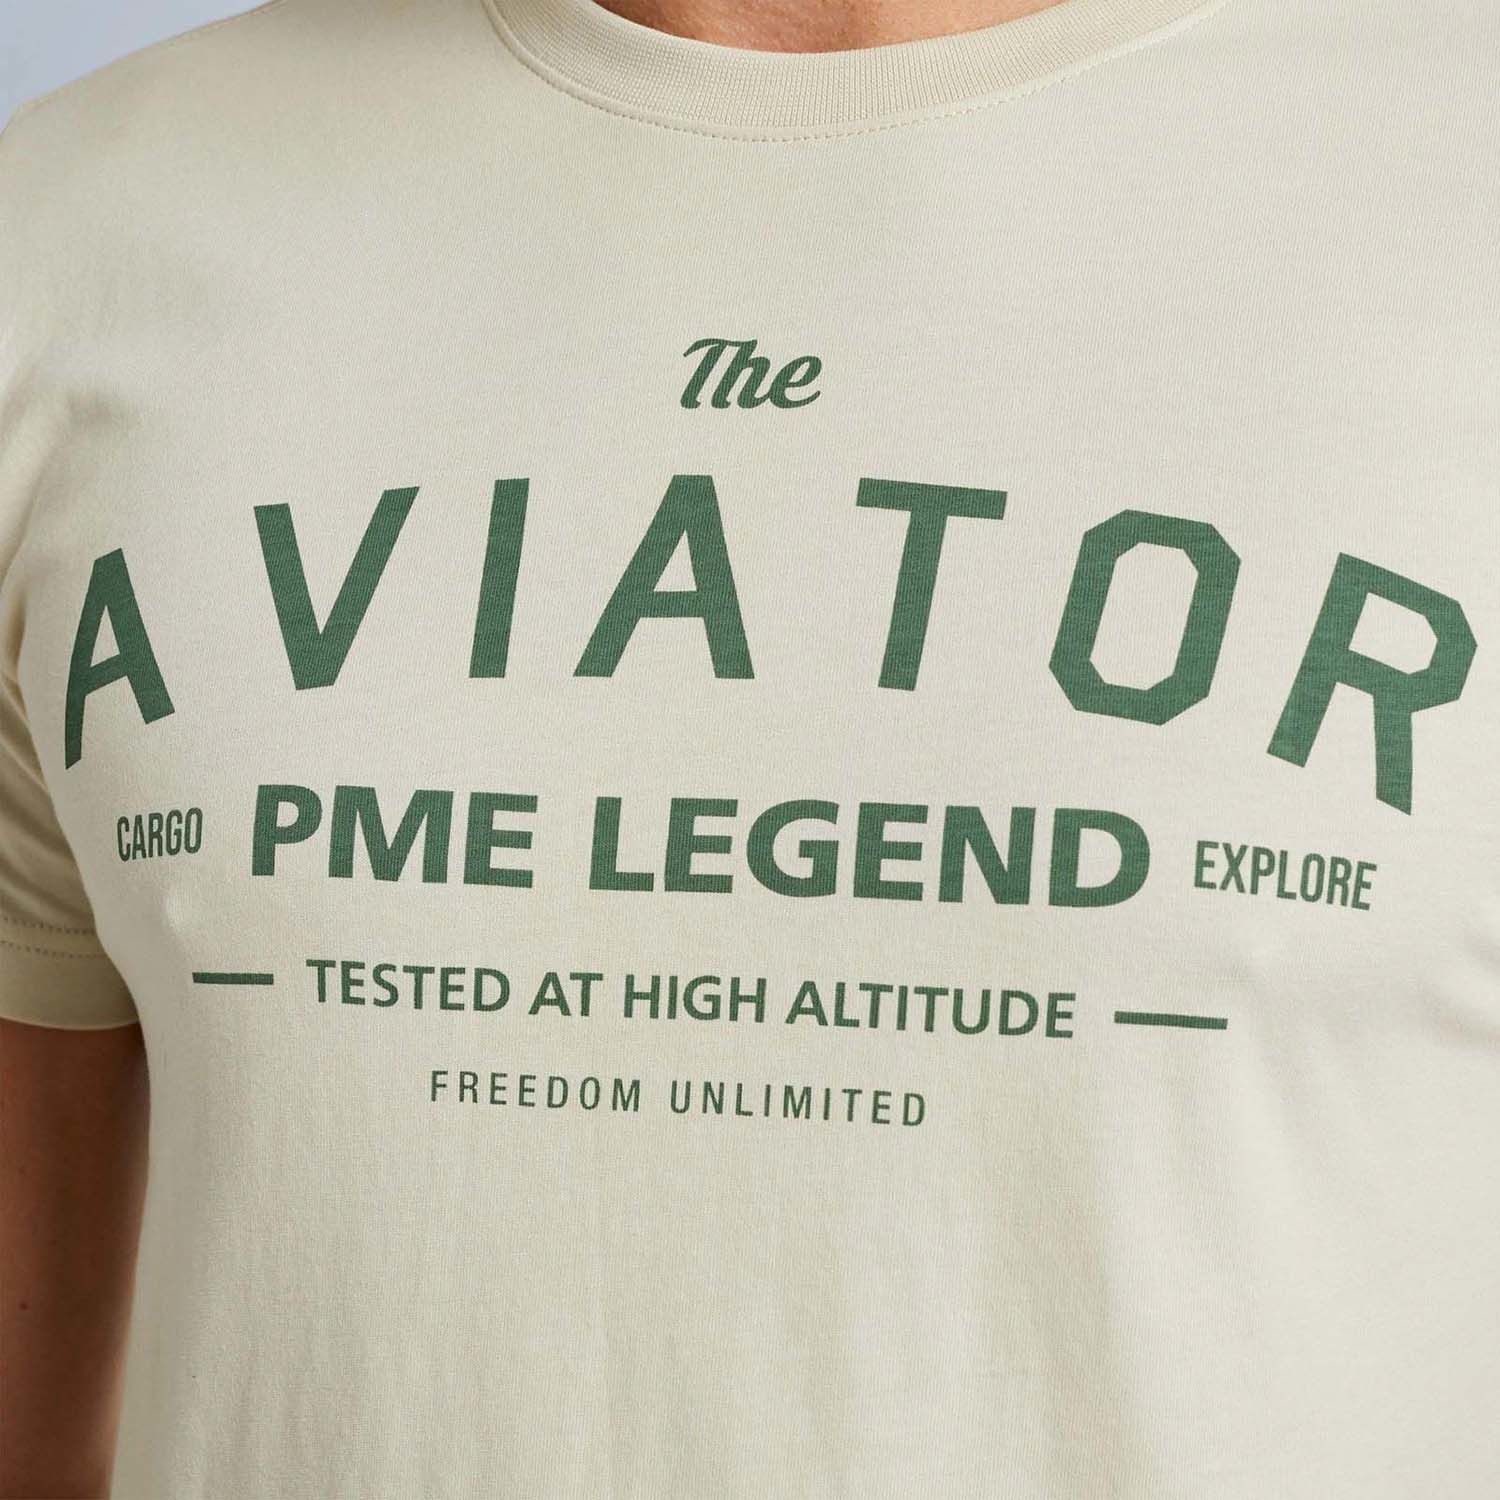 Pme Legend T-shirt Aviator Beige